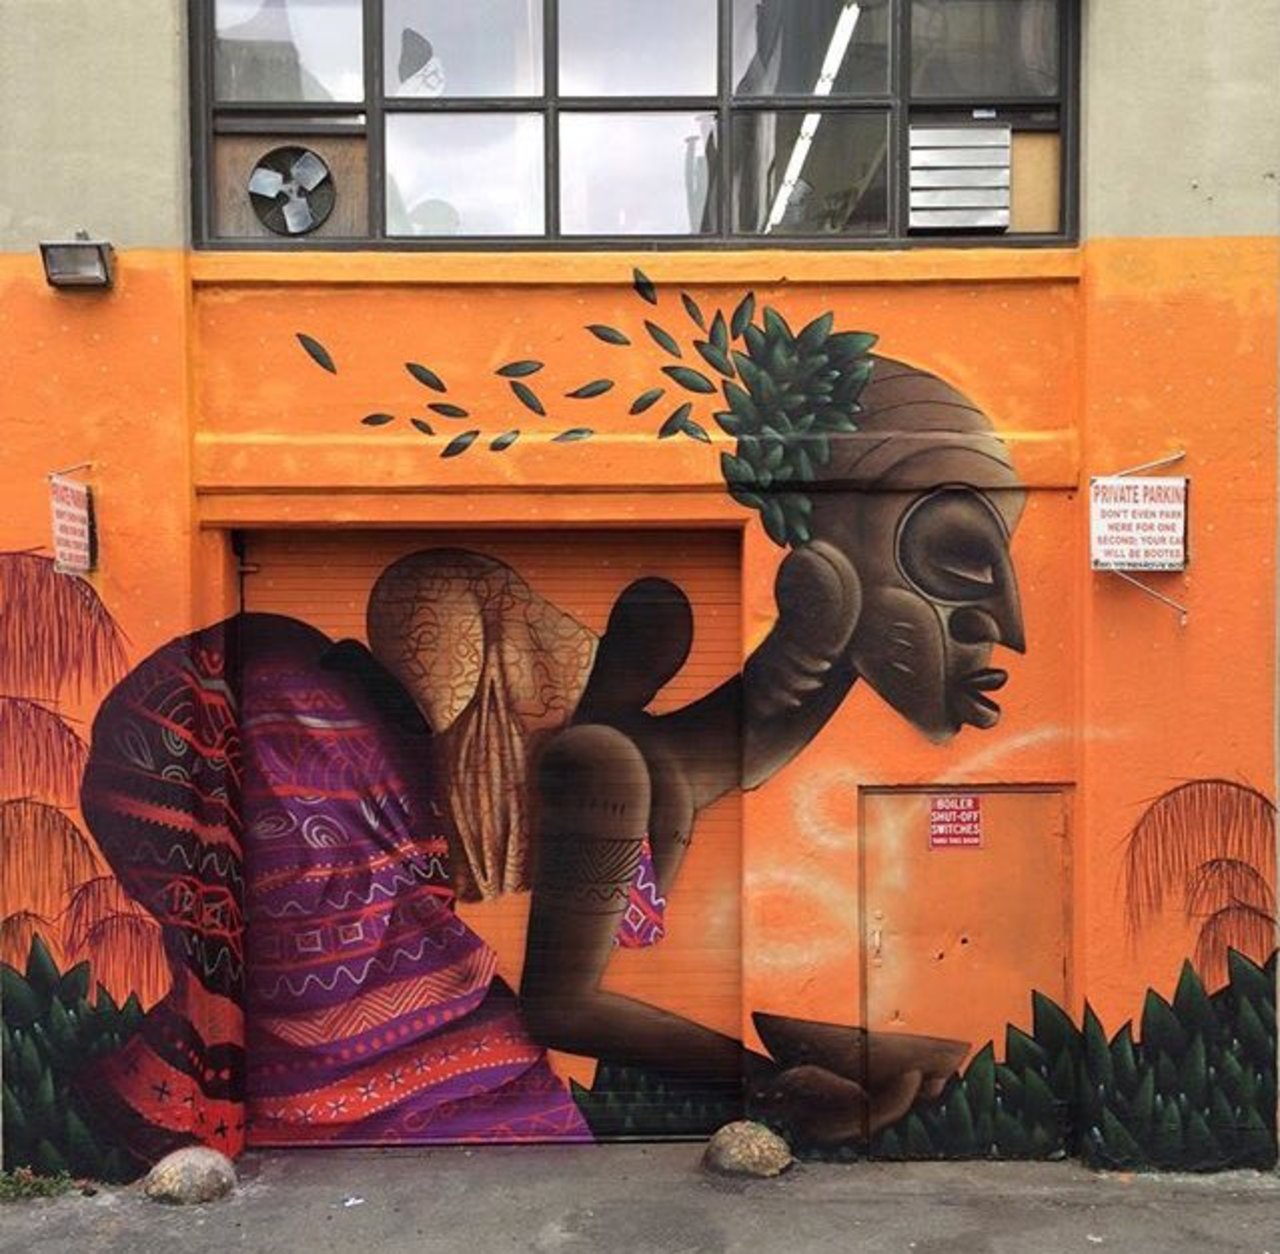 RT @HeatherGlatz: New Street Art by Alexandre Keto in NYC 

#art #graffiti #mural #streetart https://t.co/G7NVwKGOdy